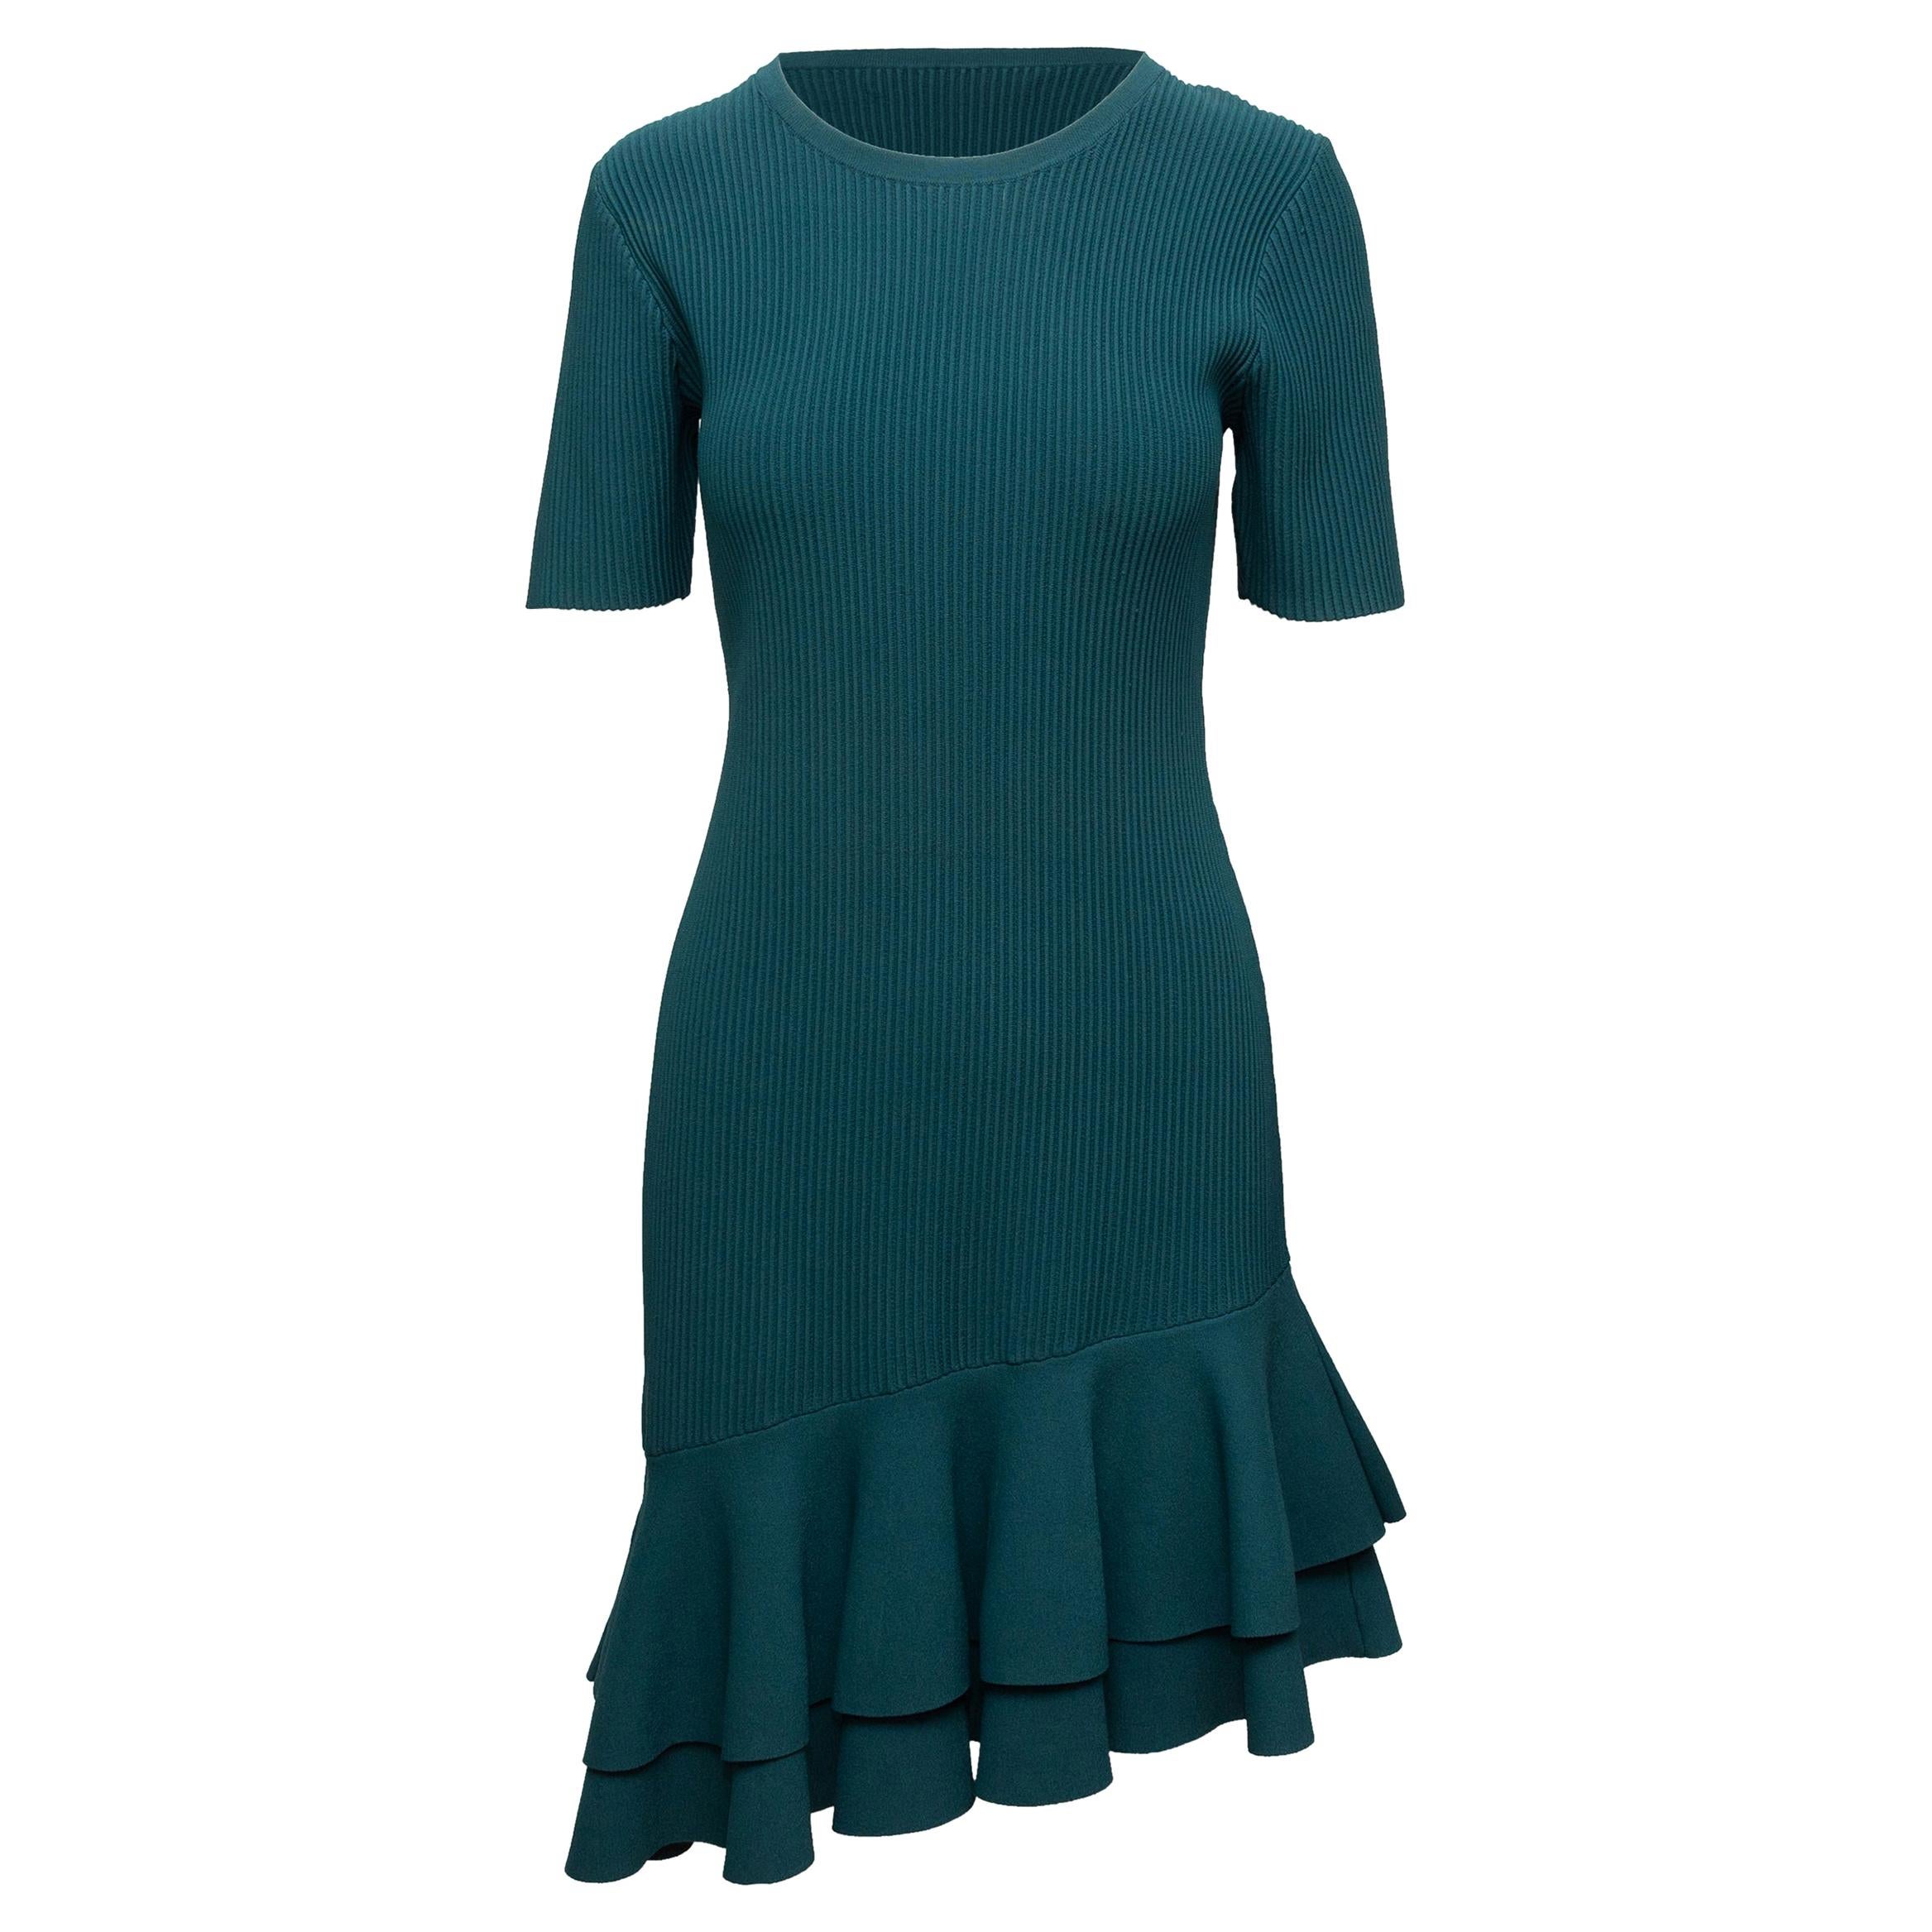 Diane Von Furstenberg Teal Rib Knit Asymmetrical Dress